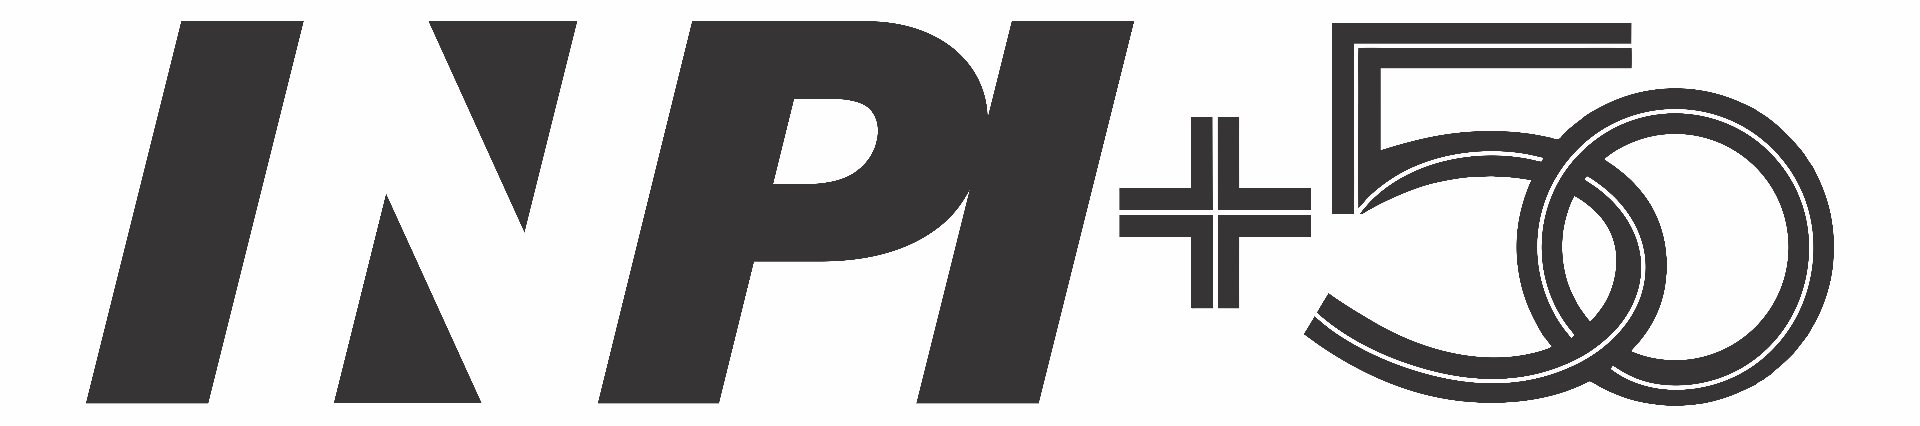 Logo INPI + 50_preta com fundo branco.jpg